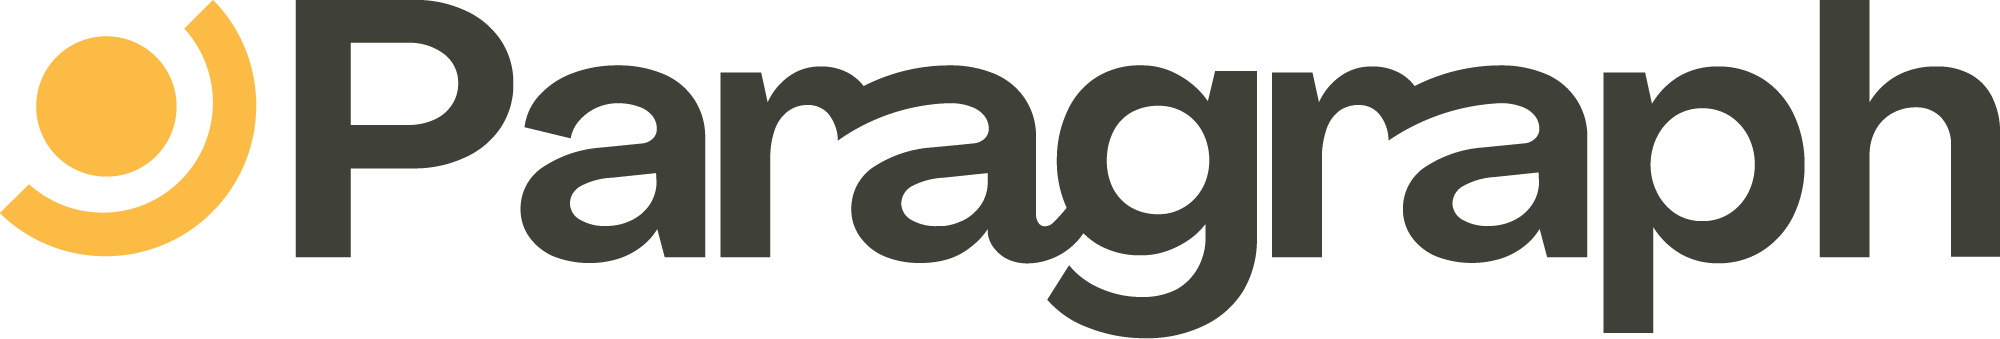 Paragraph Education Logo